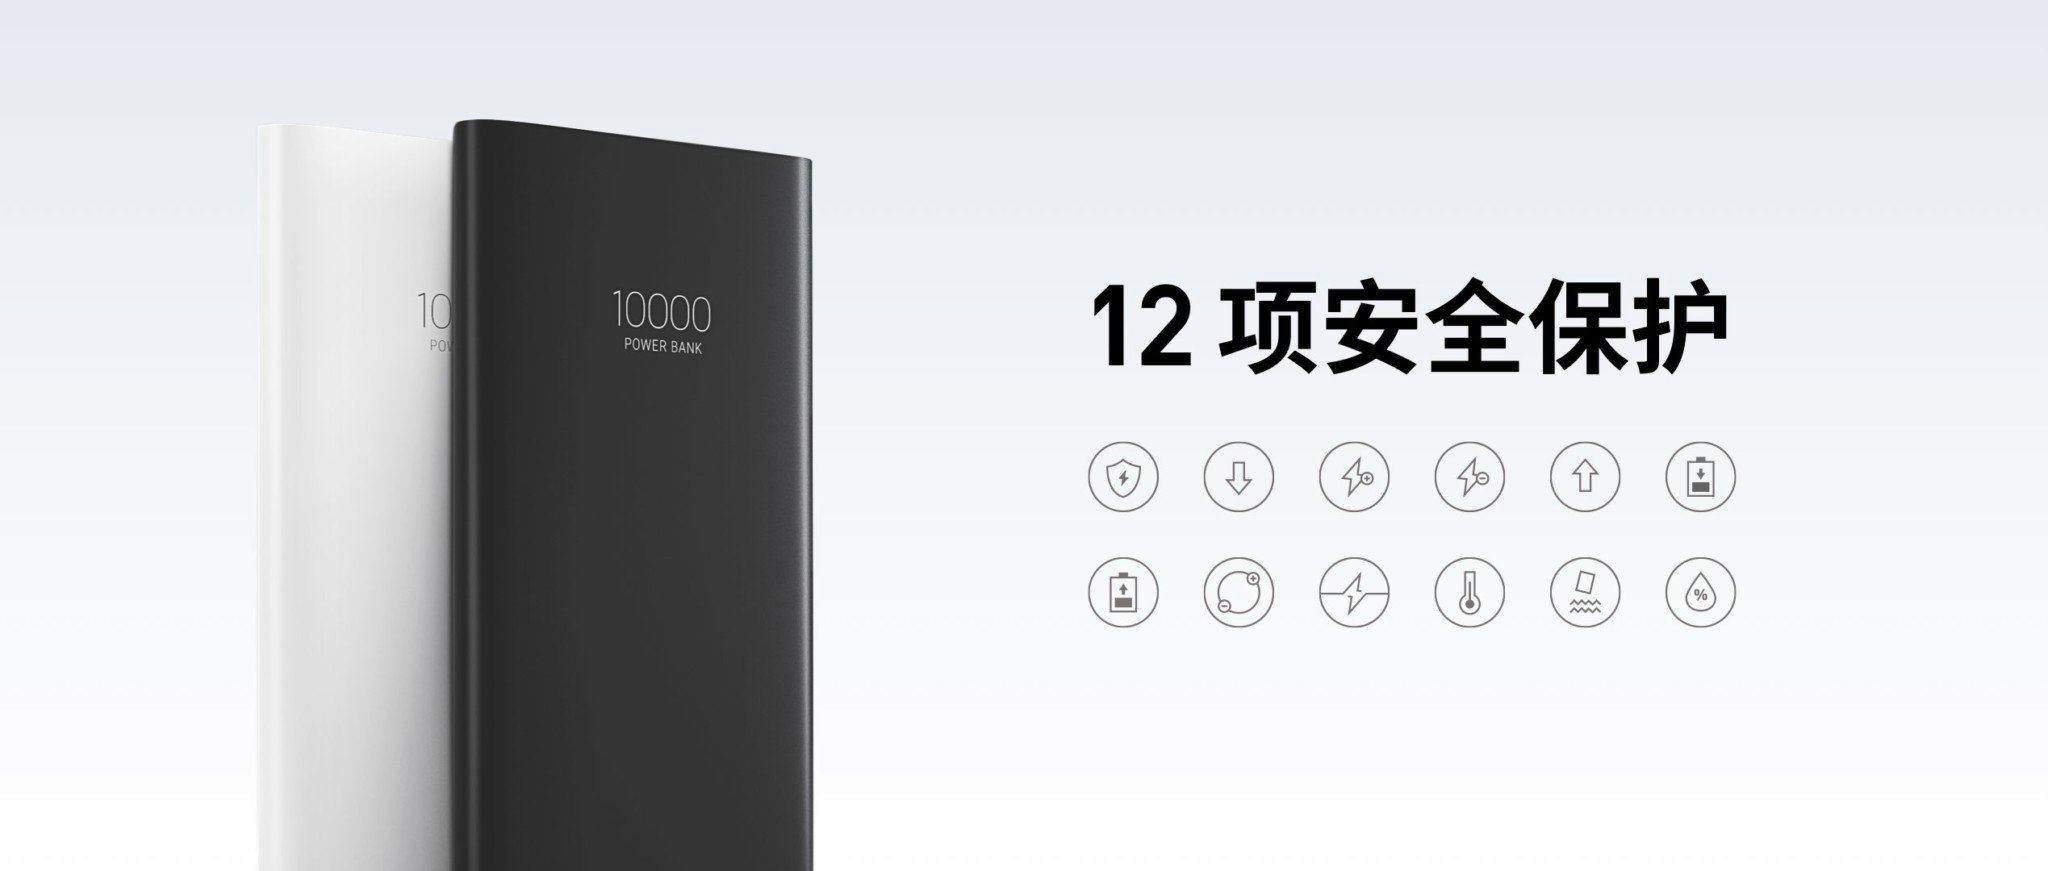 Meizu Mobile Power 3